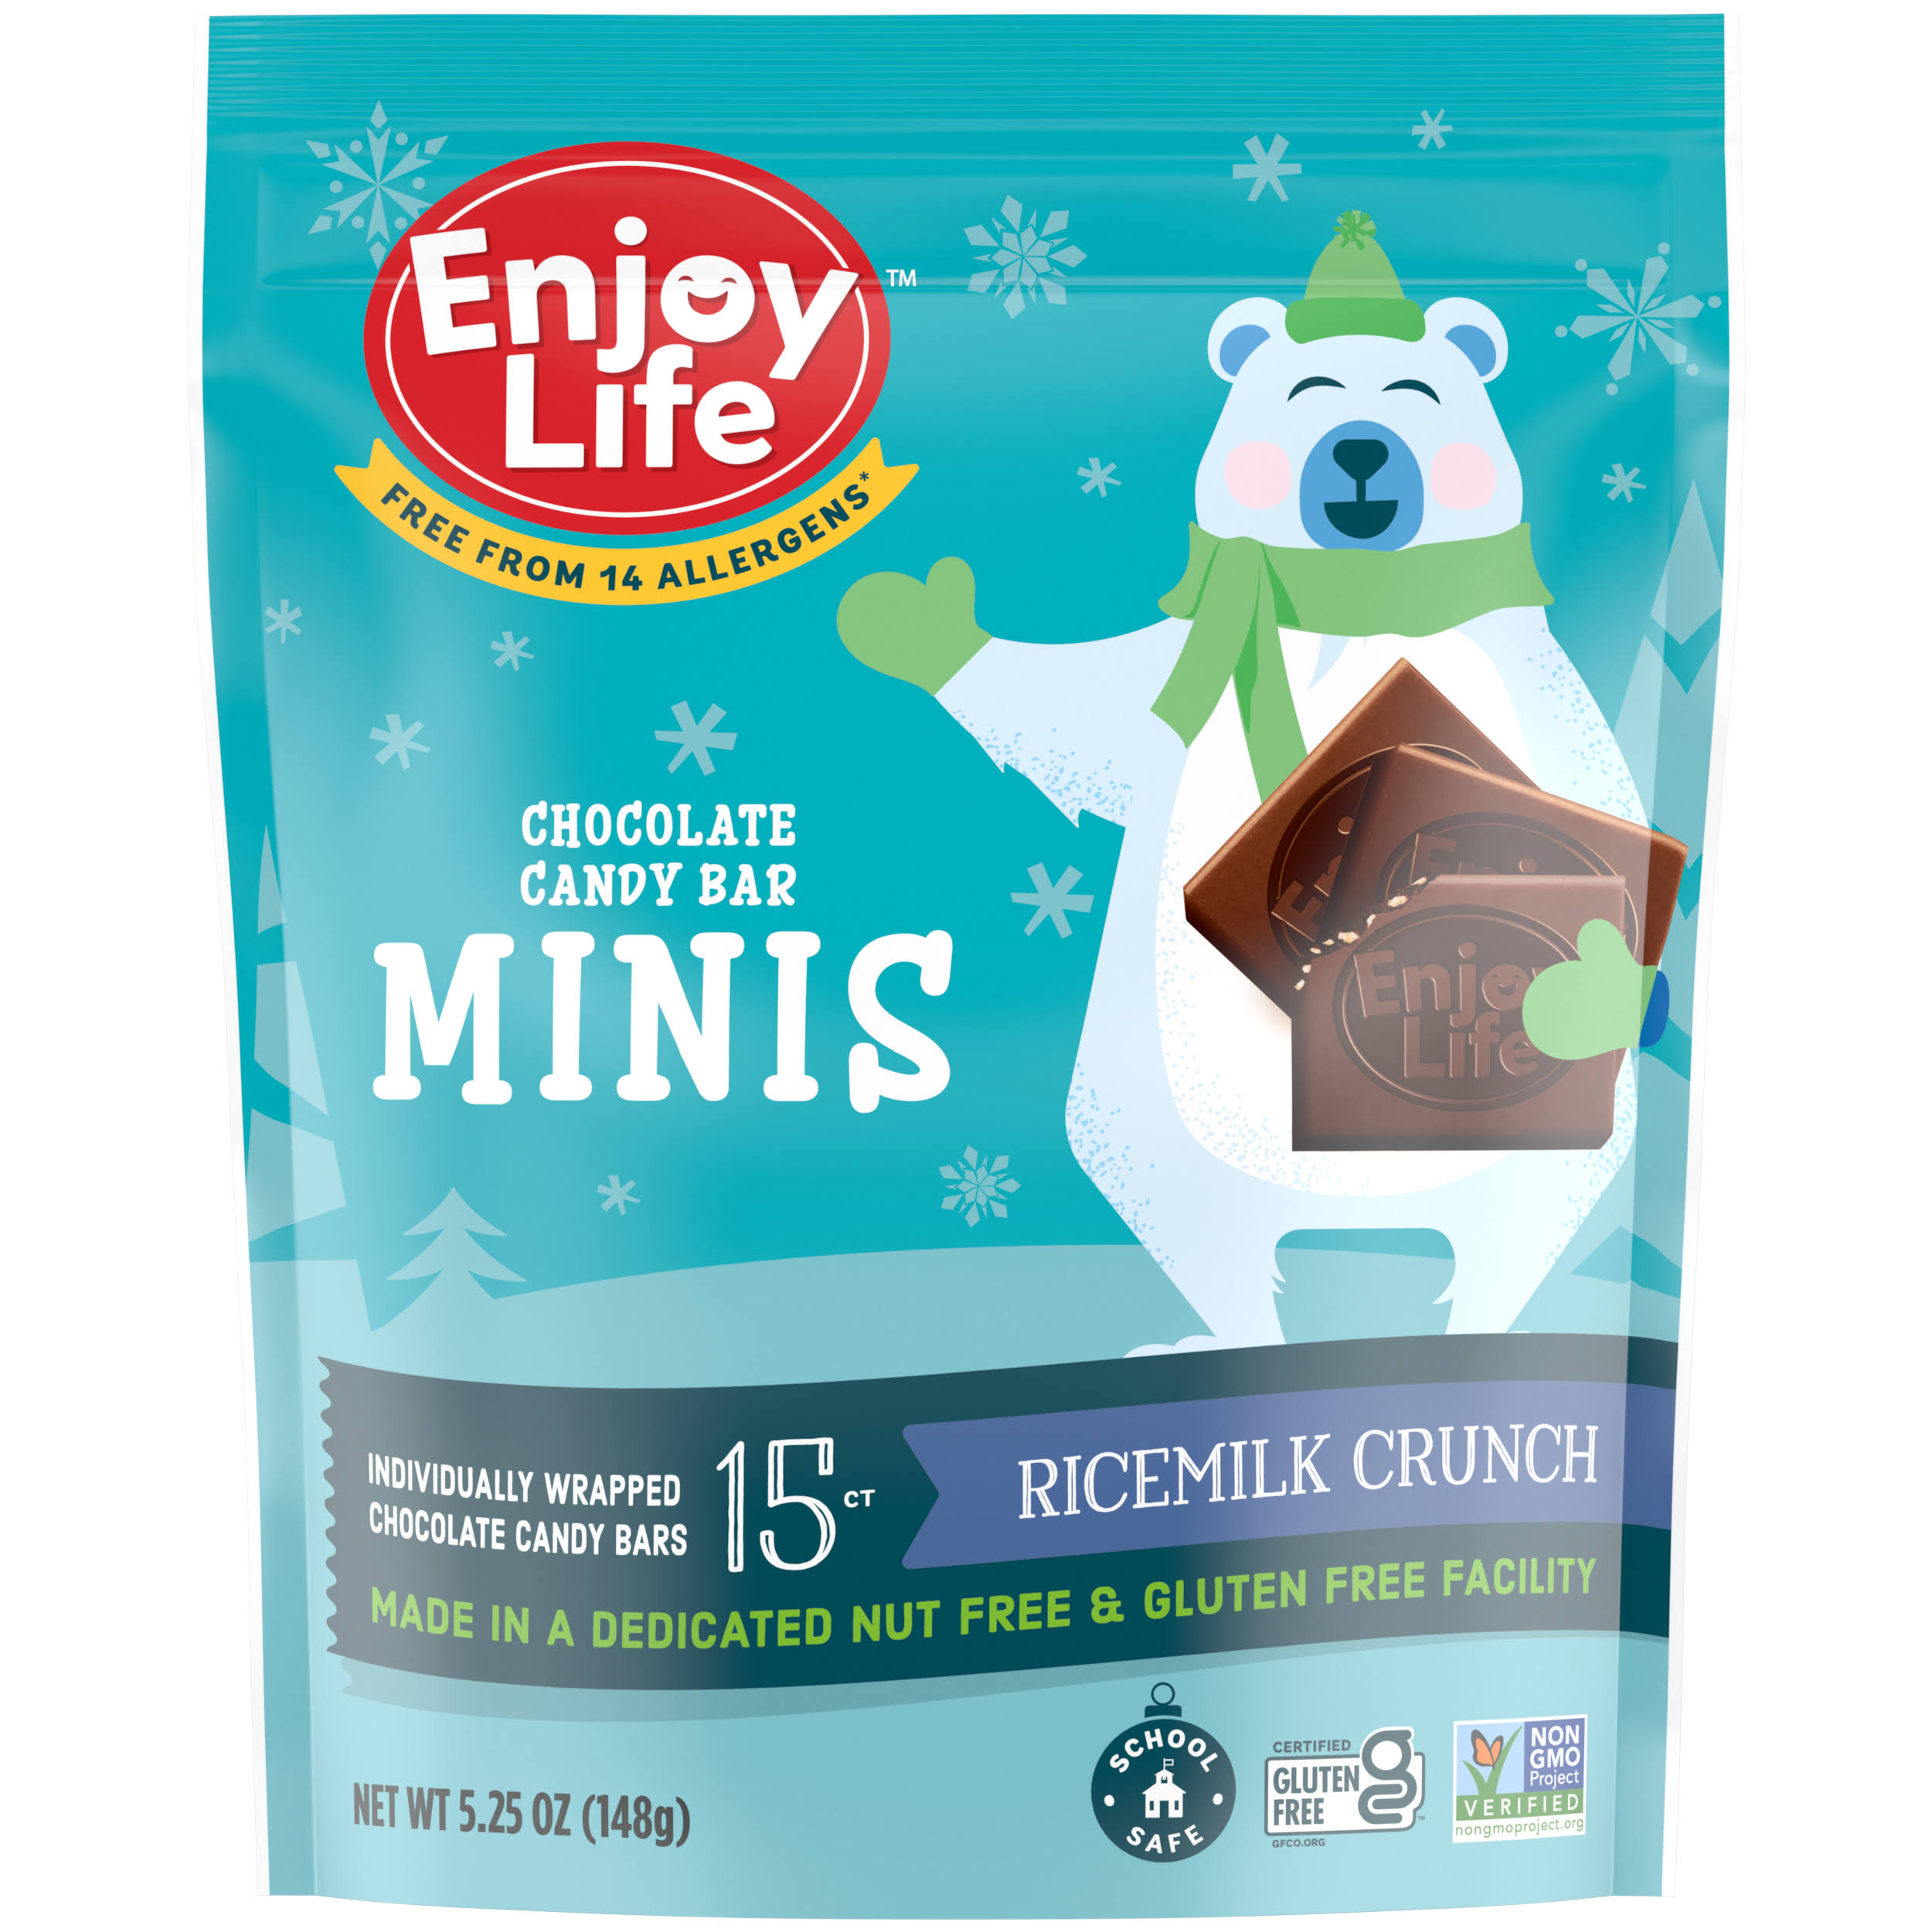 Enjoy Life Chocolate Candy Bar, Ricemilk Crunch, Minis - 15 bars, 5.25 oz